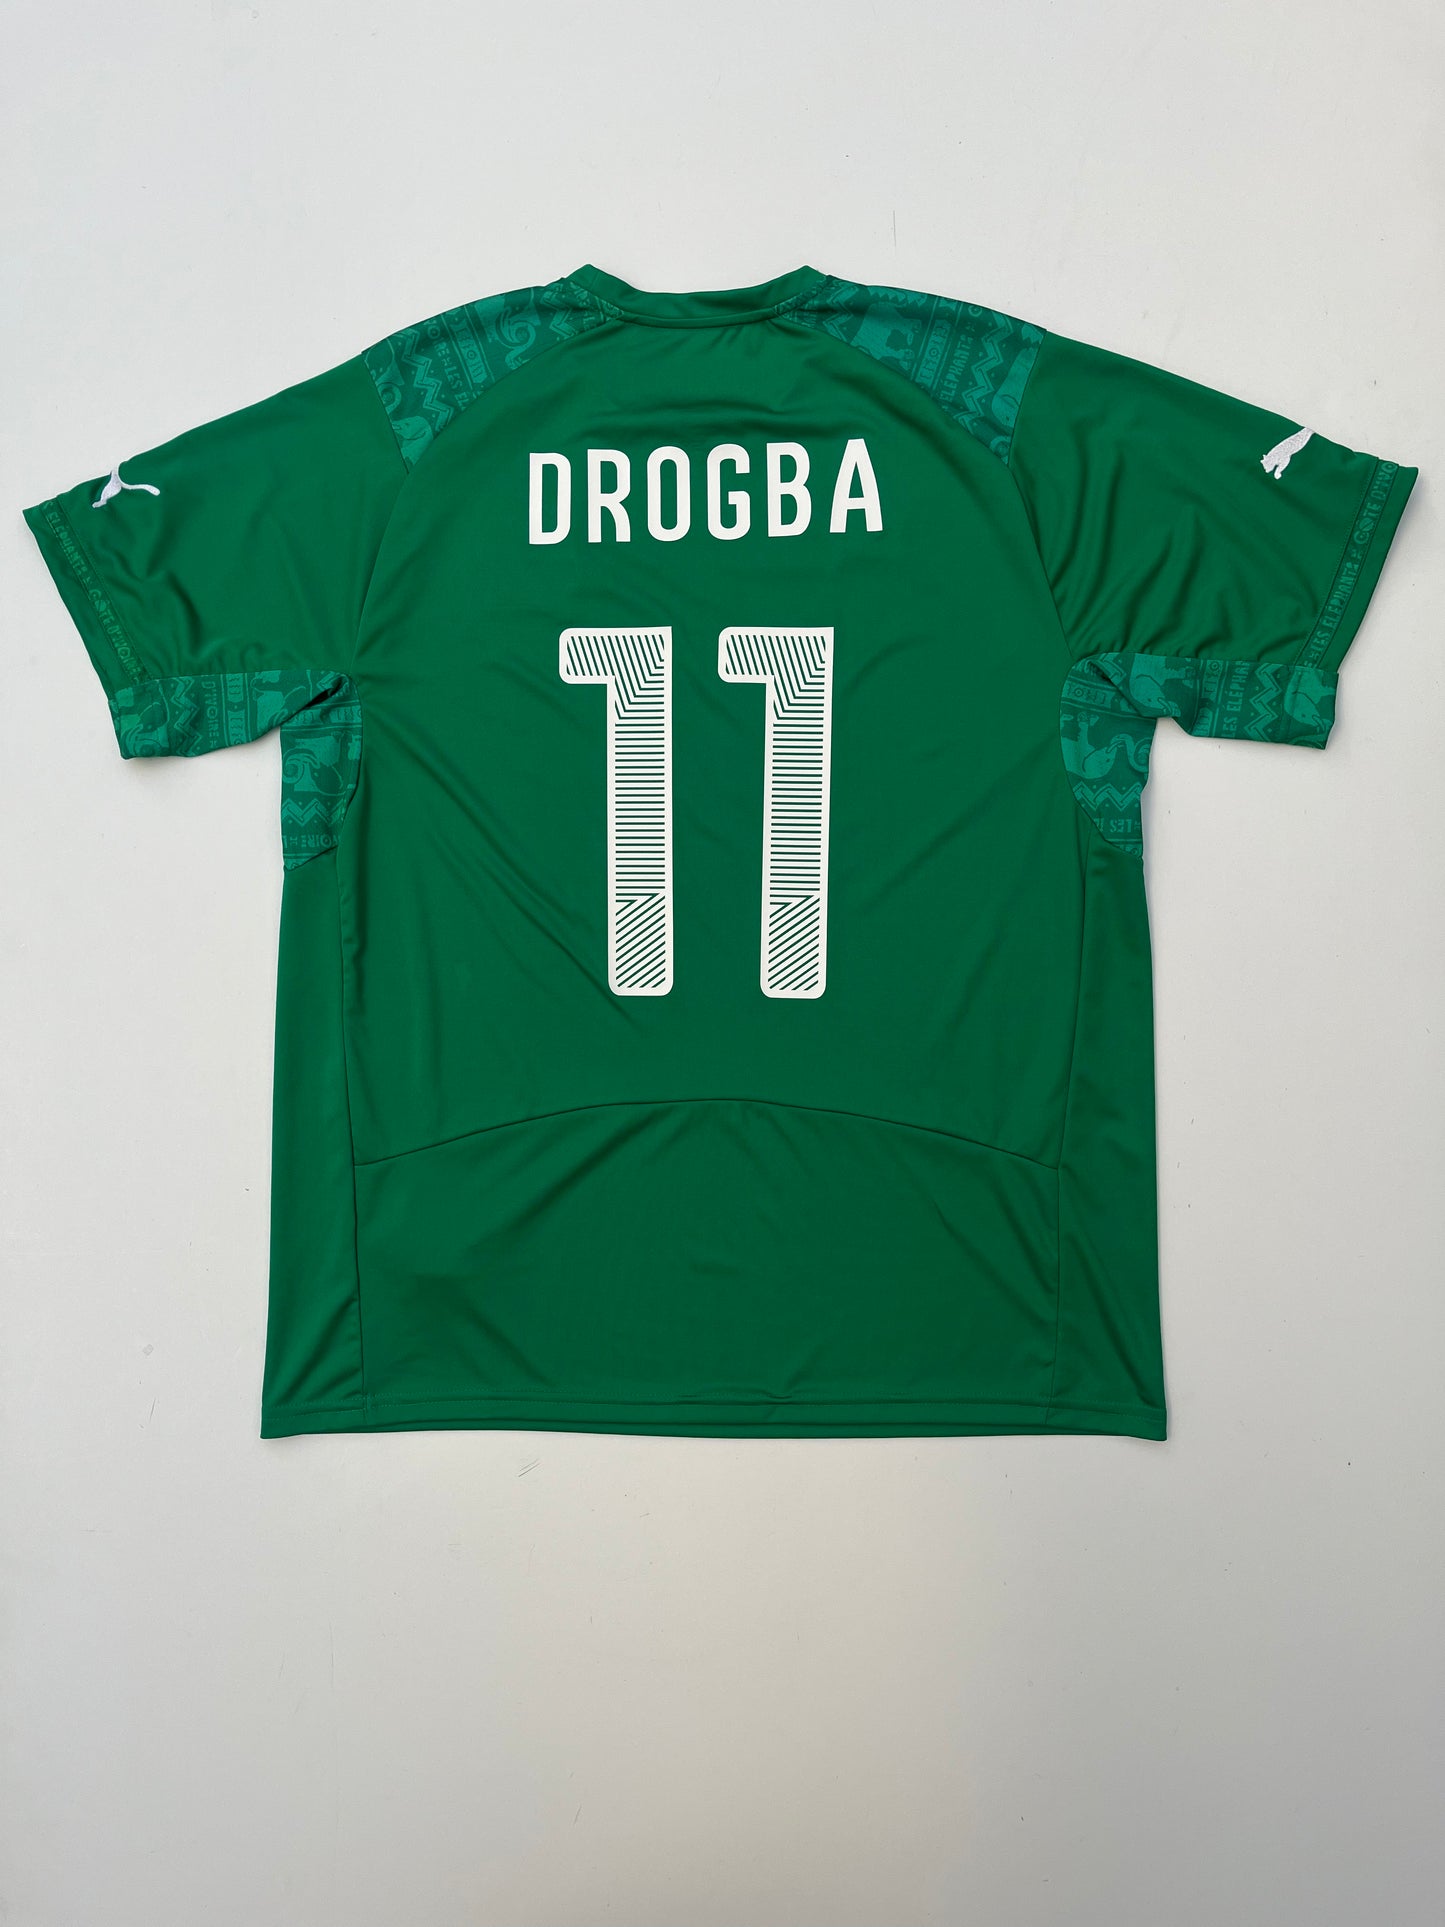 Jersey Costa de Marfil Local 2014 2015 Didier Drogba (XL)